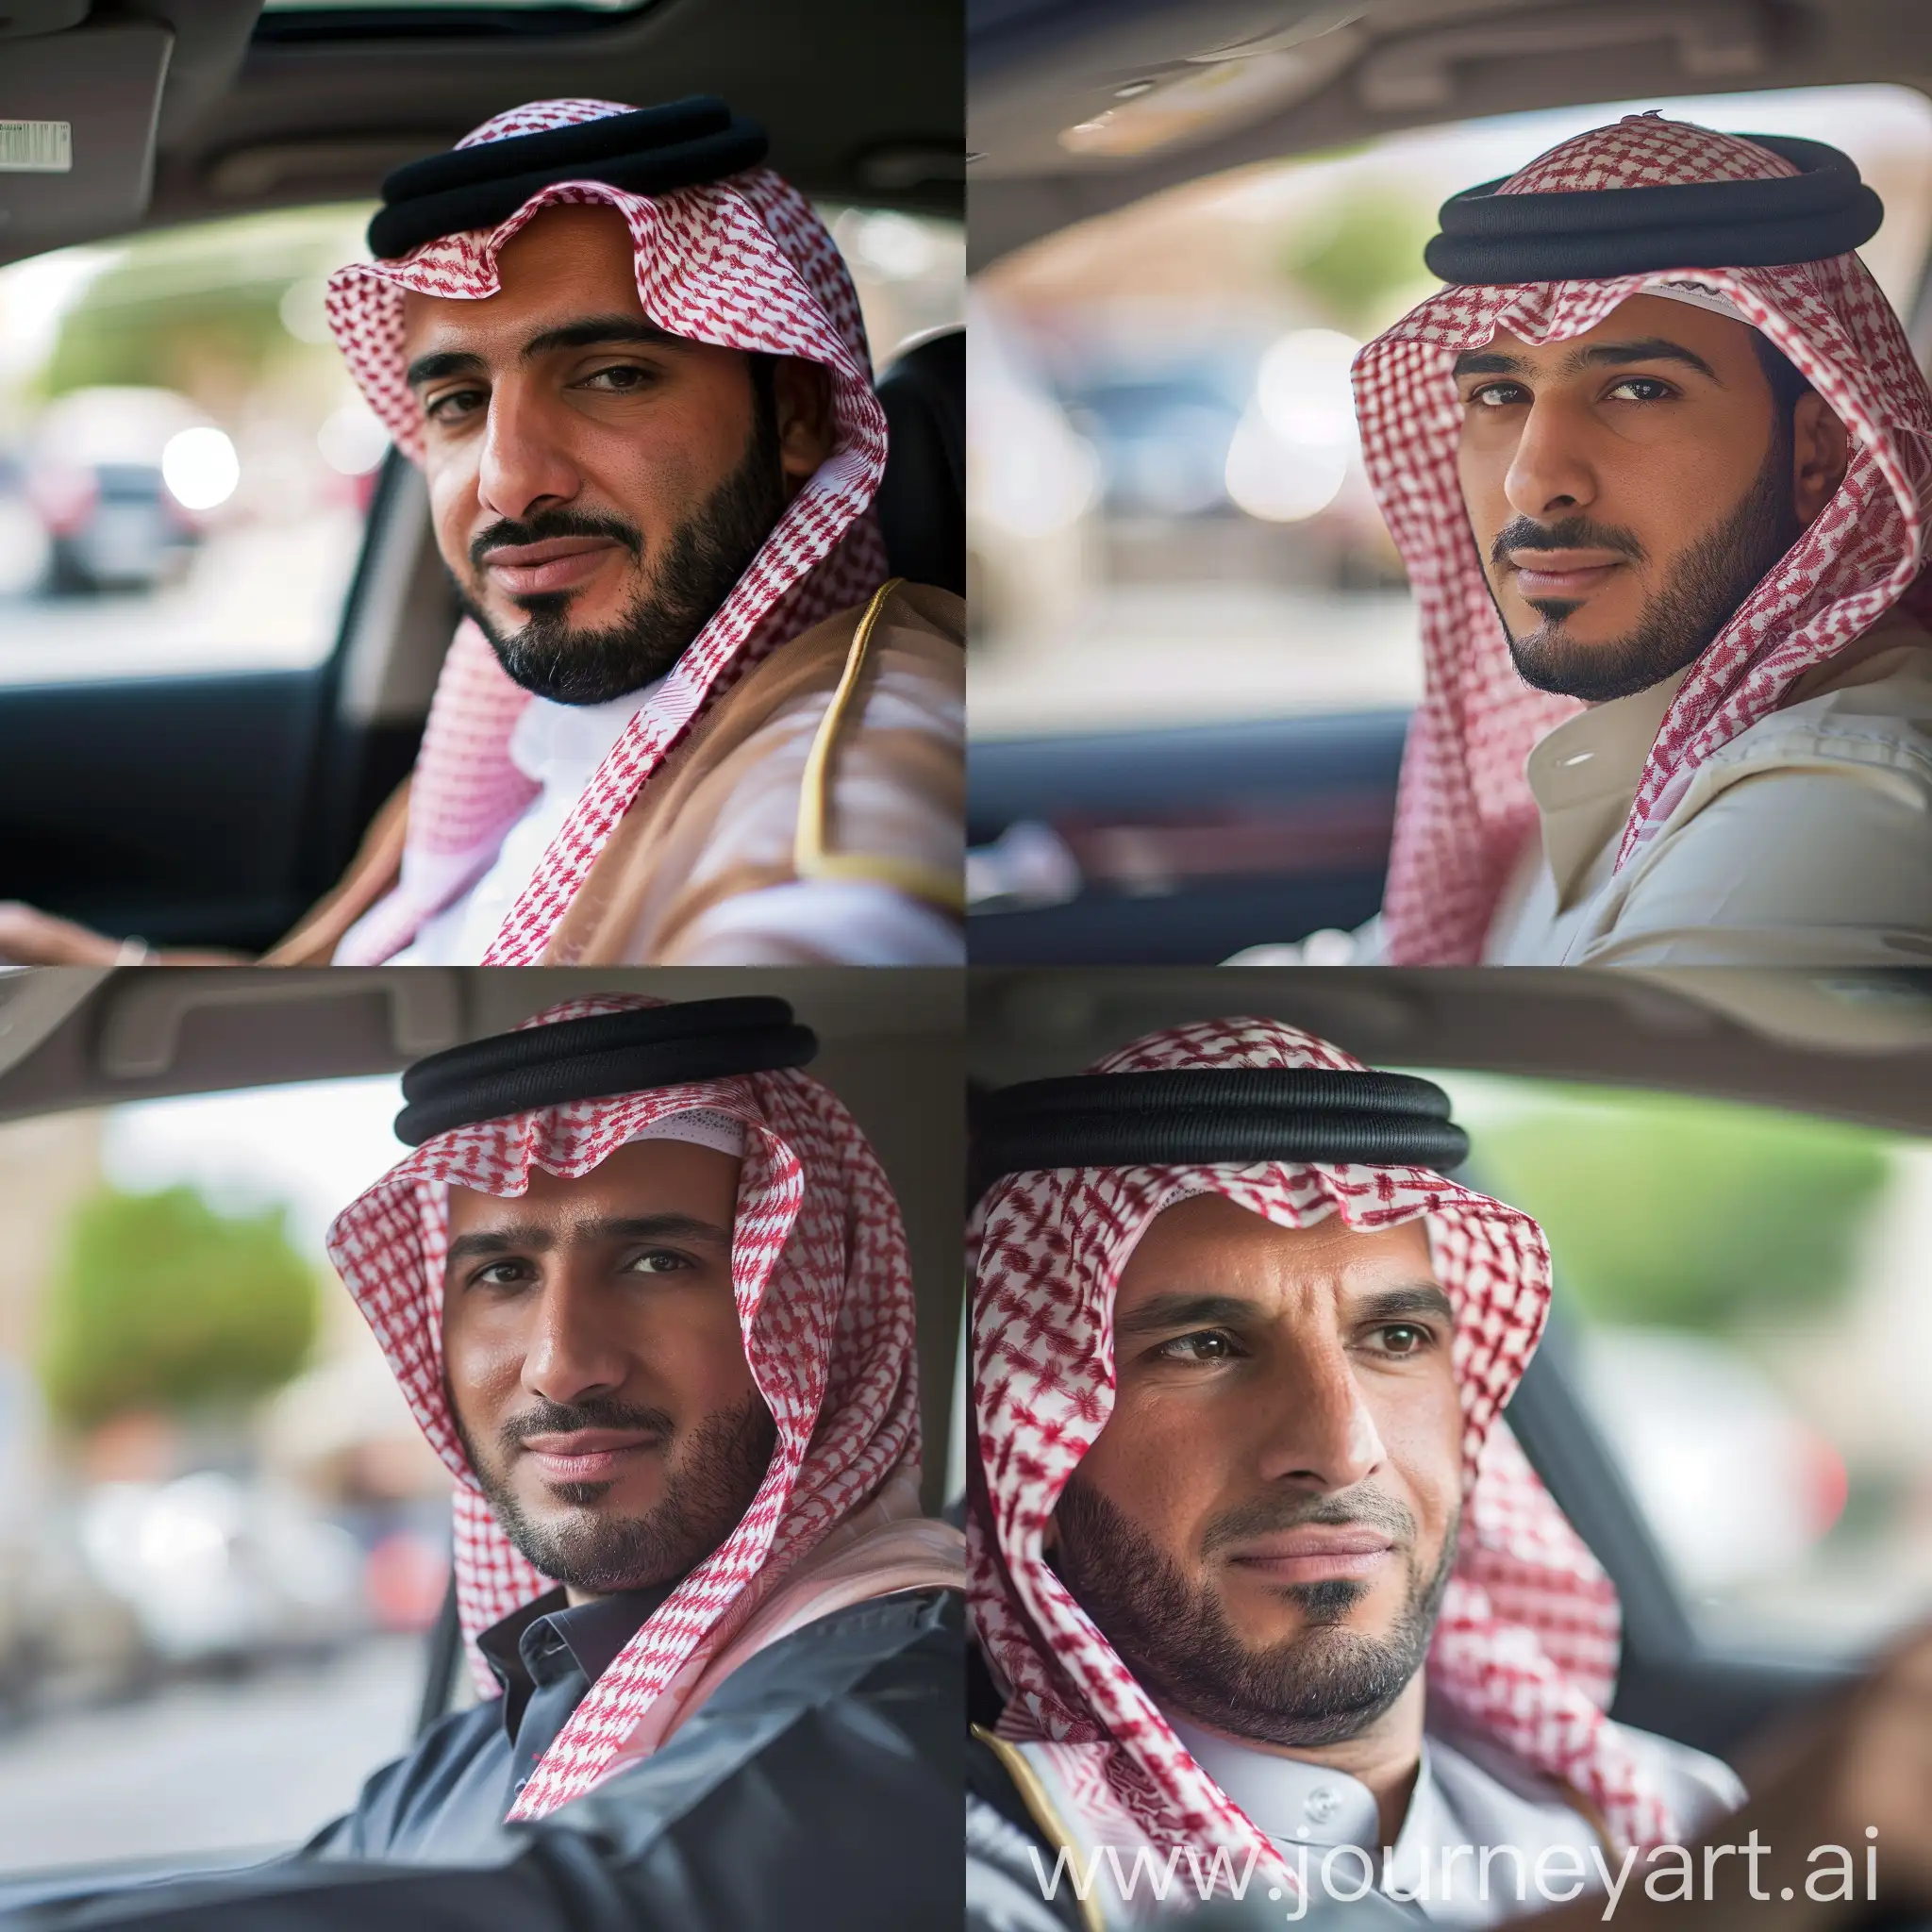 Modern-Car-Driving-Saudi-Man-in-Thirties-with-Light-Beard